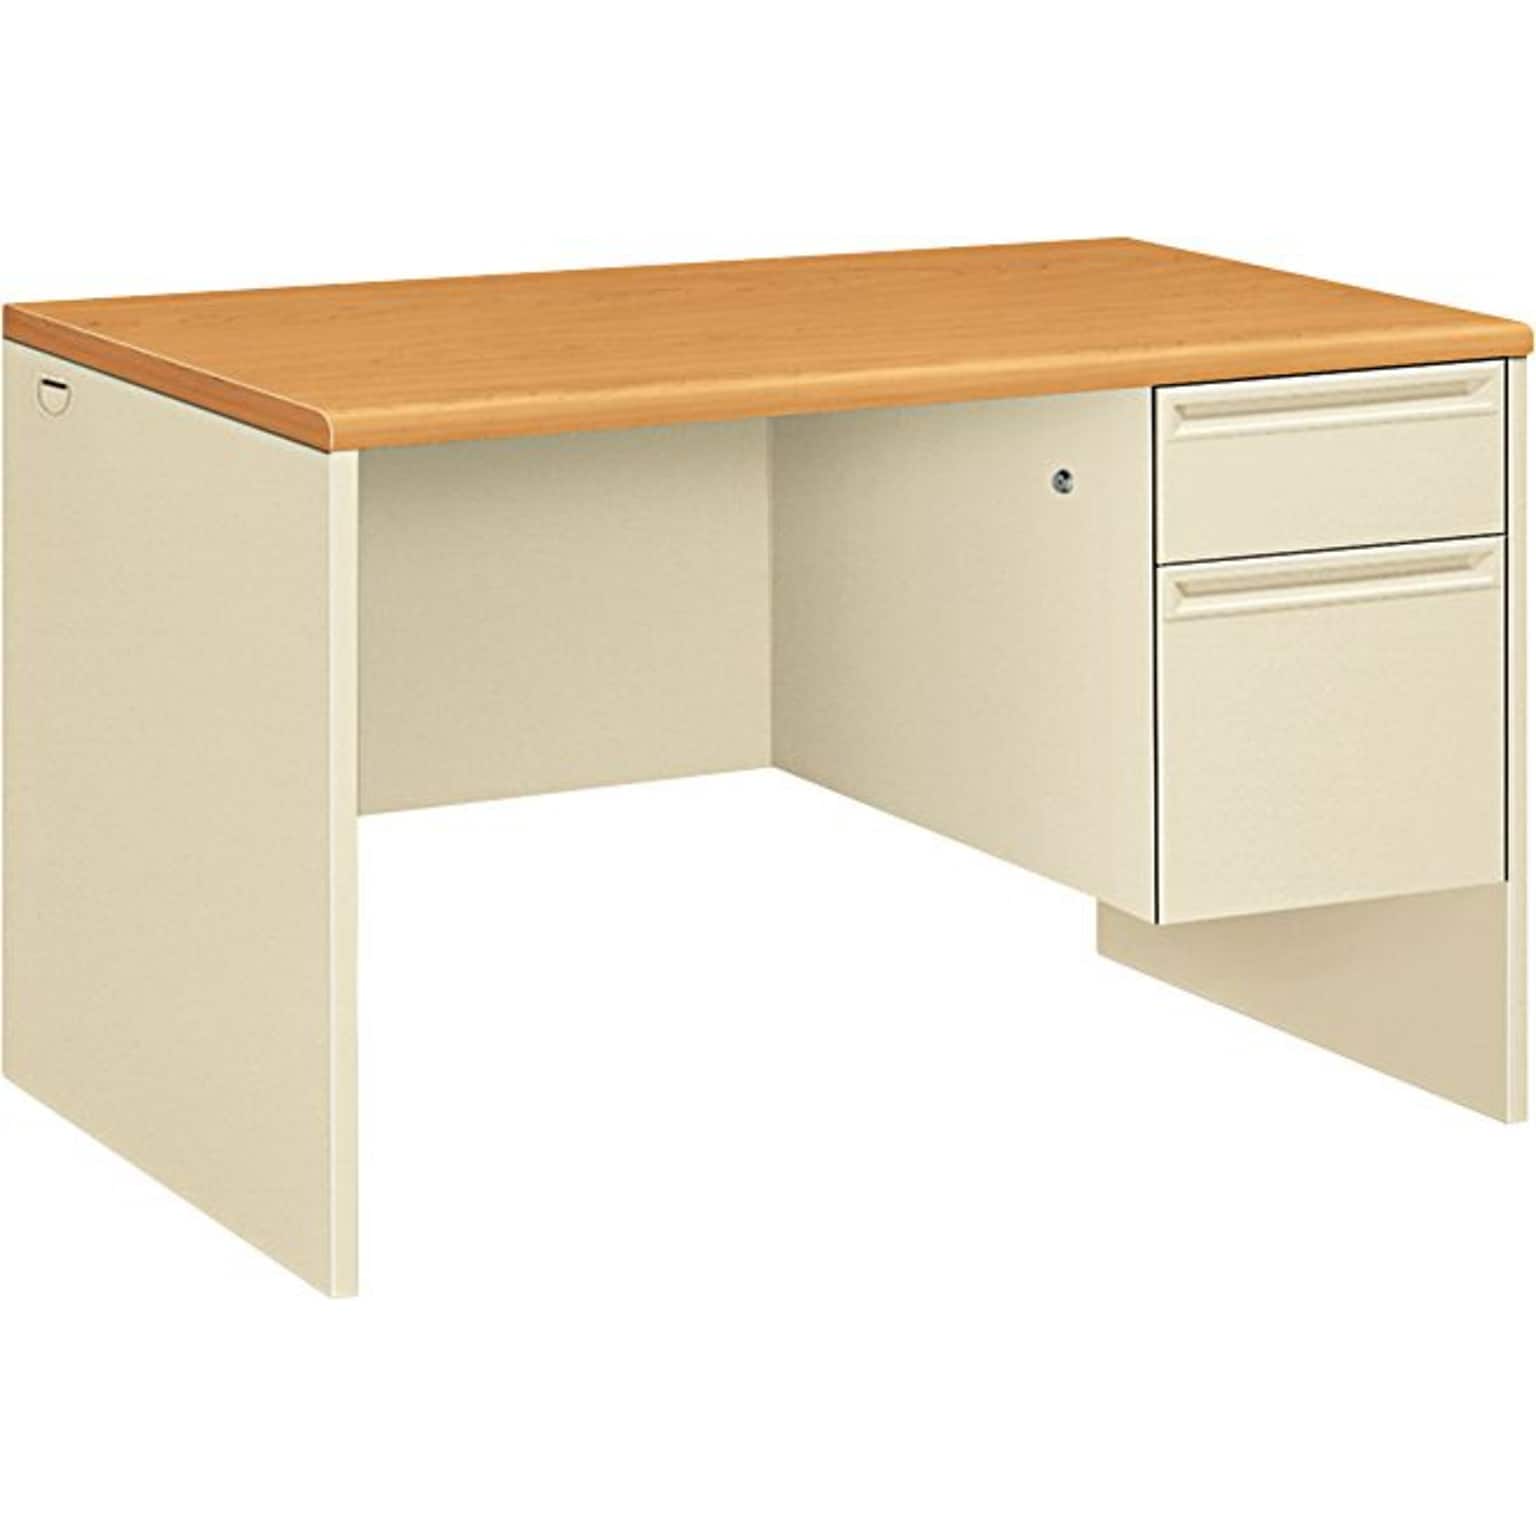 HON® 38000 Series Single Pedestal Desk, Harvest Oak/Putty